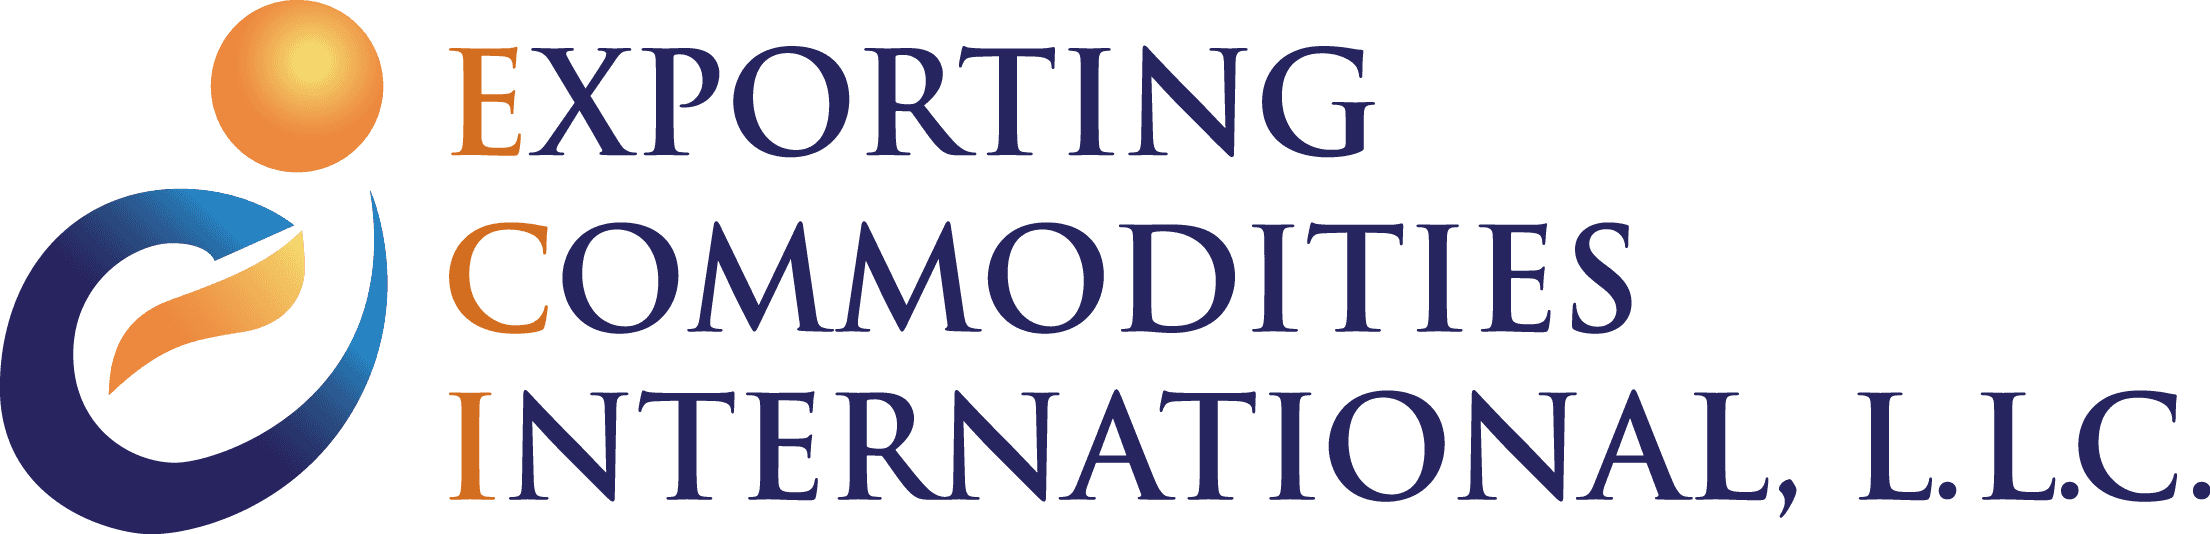 ECI - Exporting Commodities International